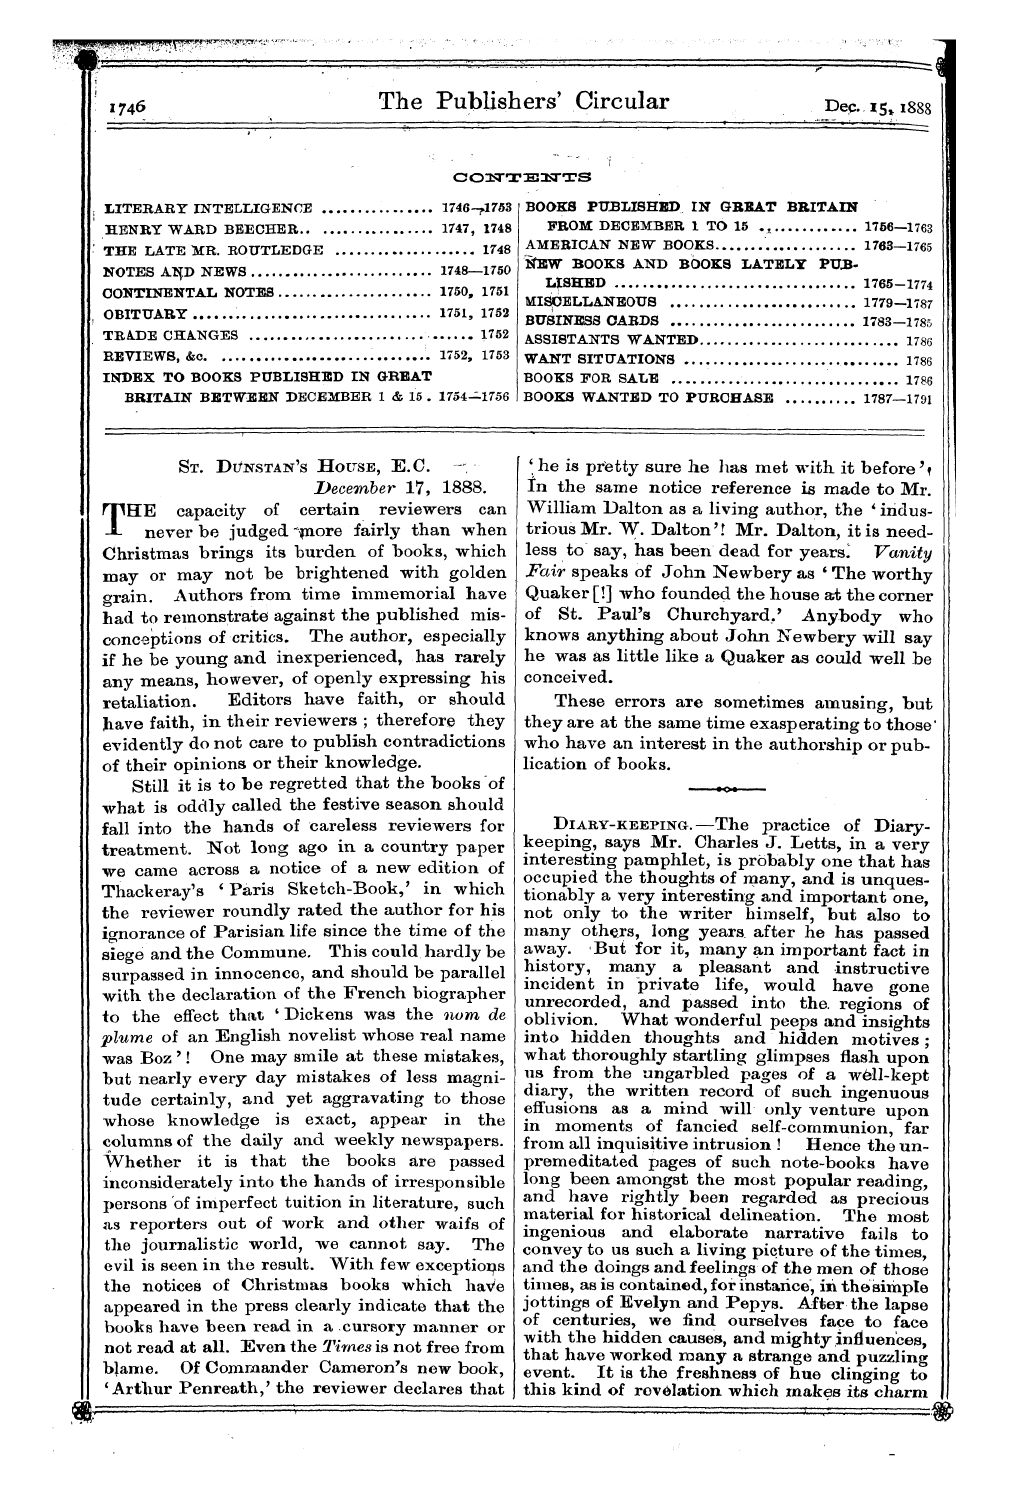 Publishers’ Circular (1880-1890): jS F Y, 1st edition - Co1ttbuts I